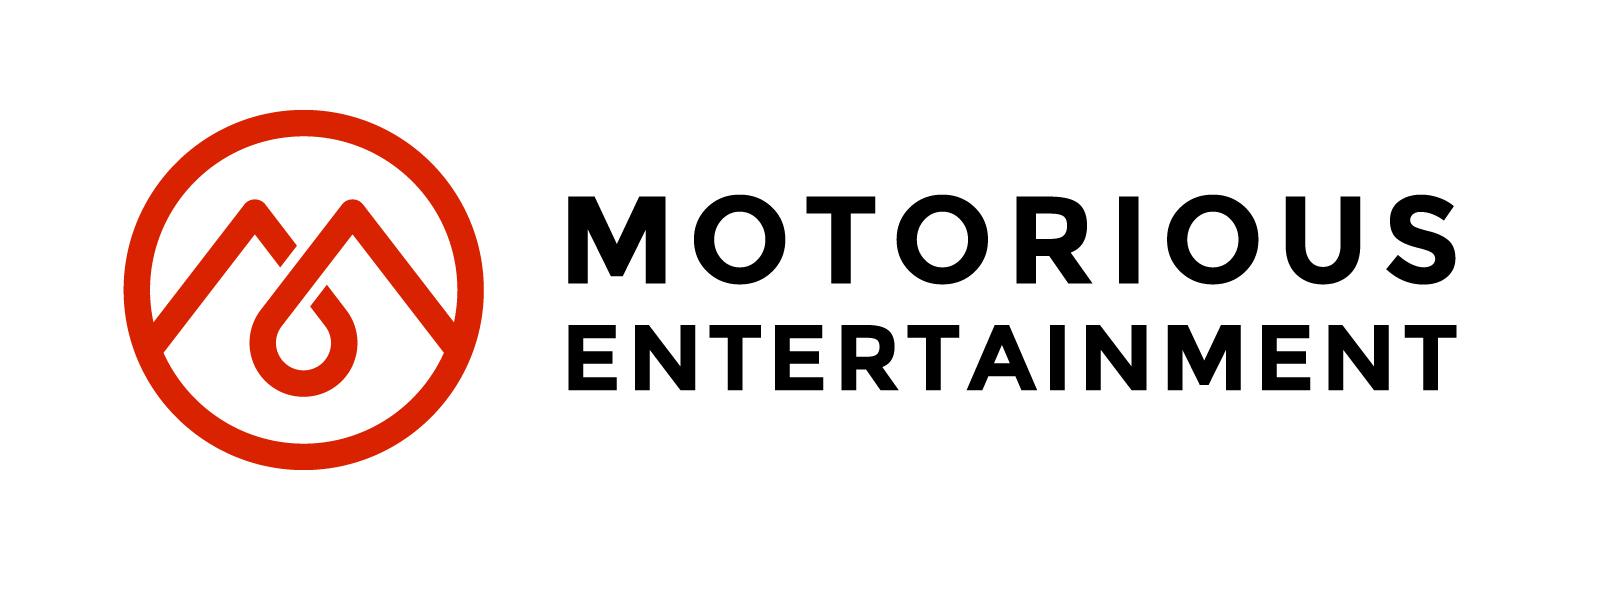 motorious-logo.jpg